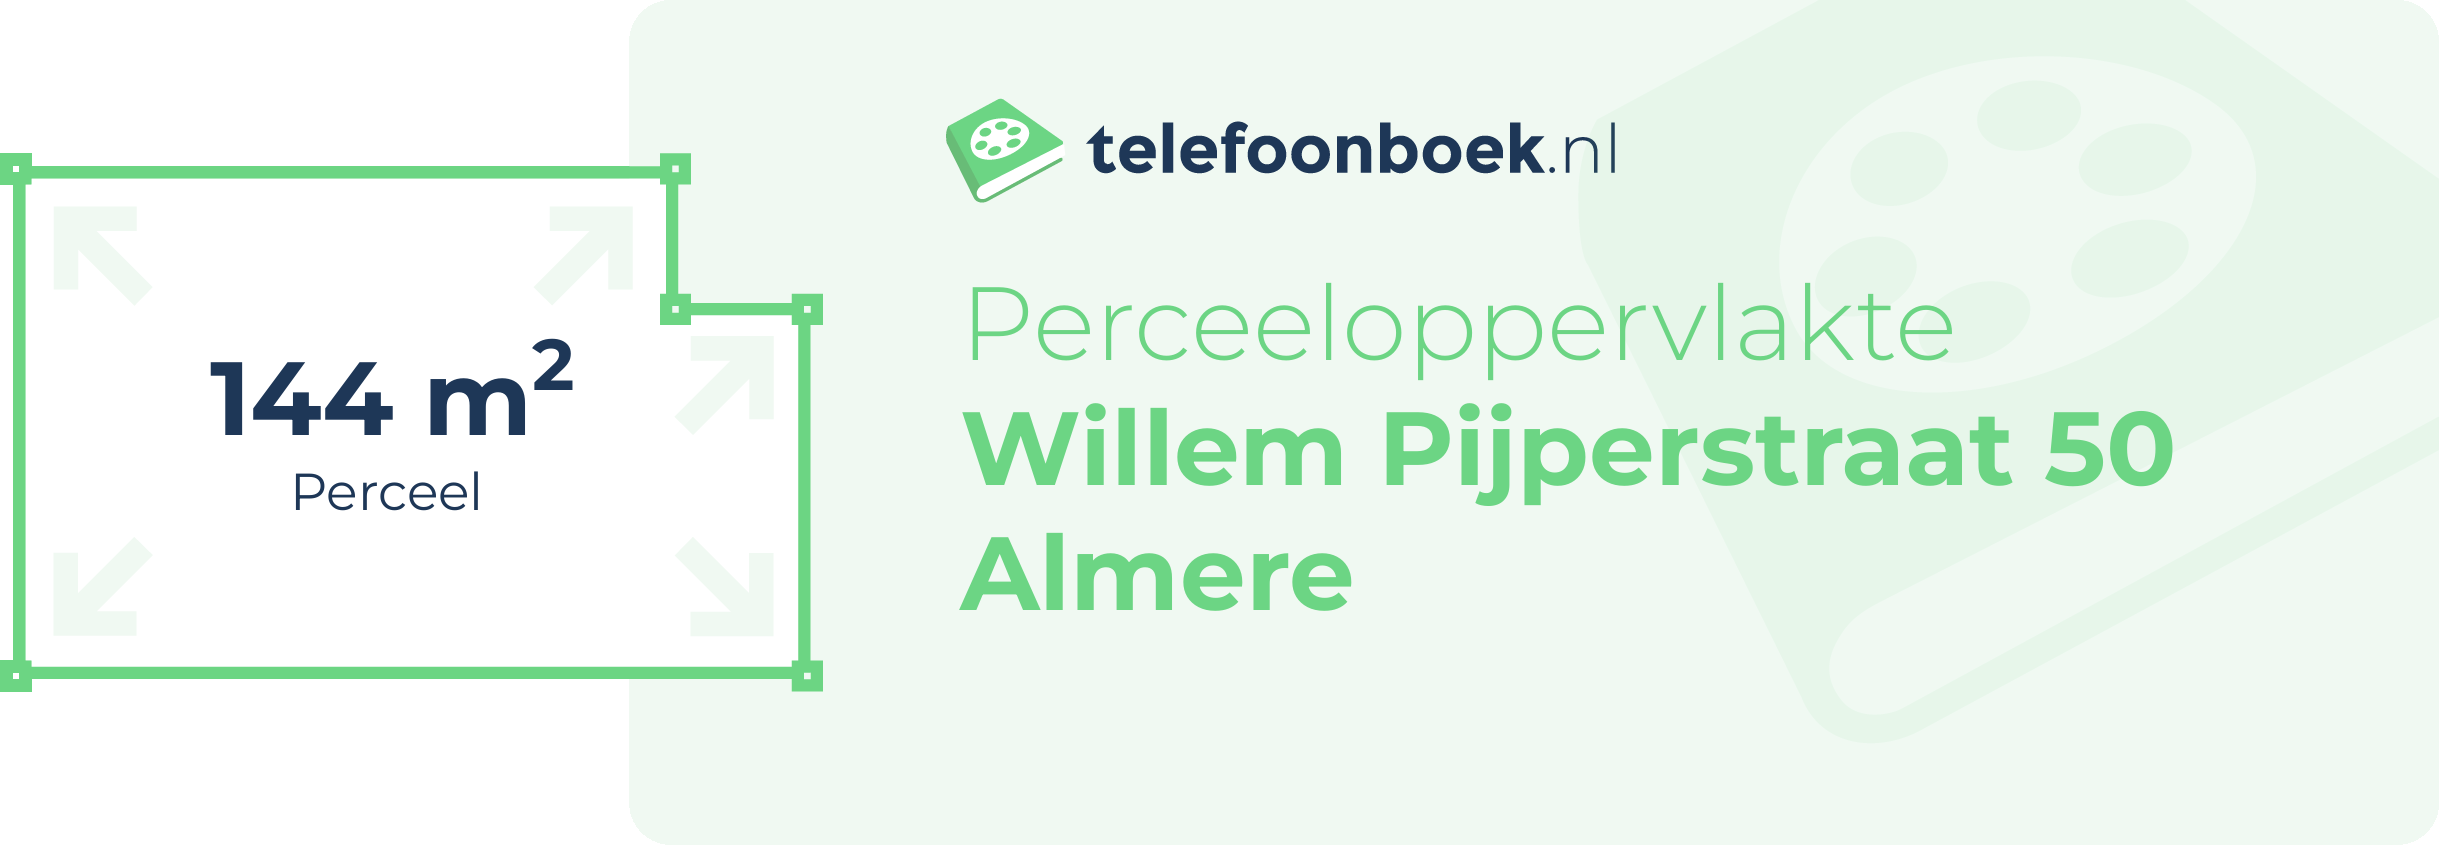 Perceeloppervlakte Willem Pijperstraat 50 Almere